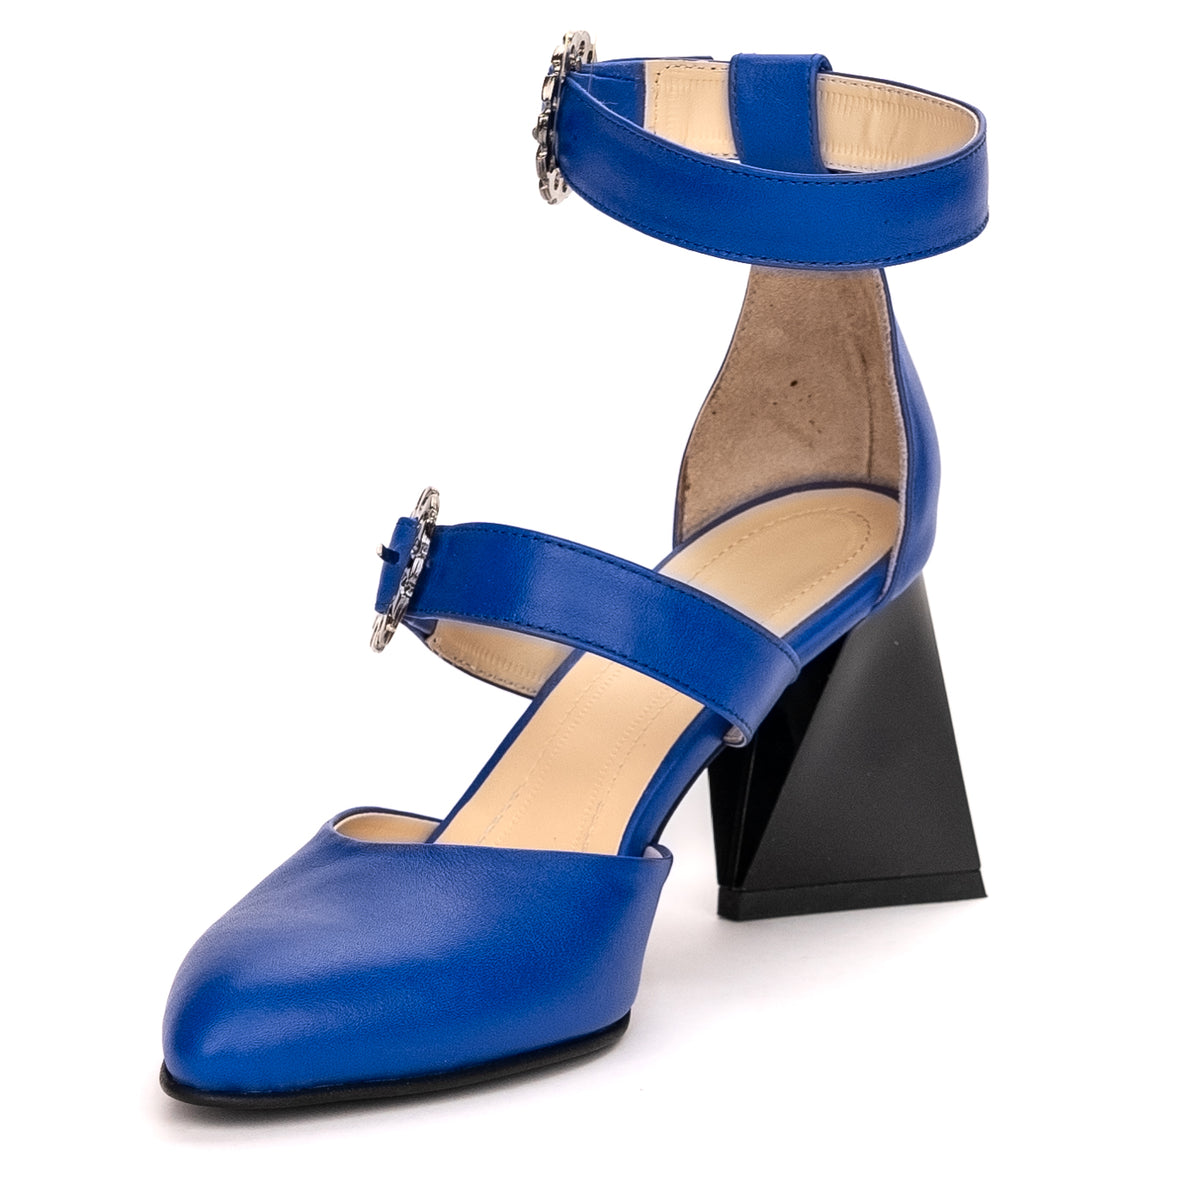 Sandale dama din piele naturala albastra 13405 – Superlative.ro